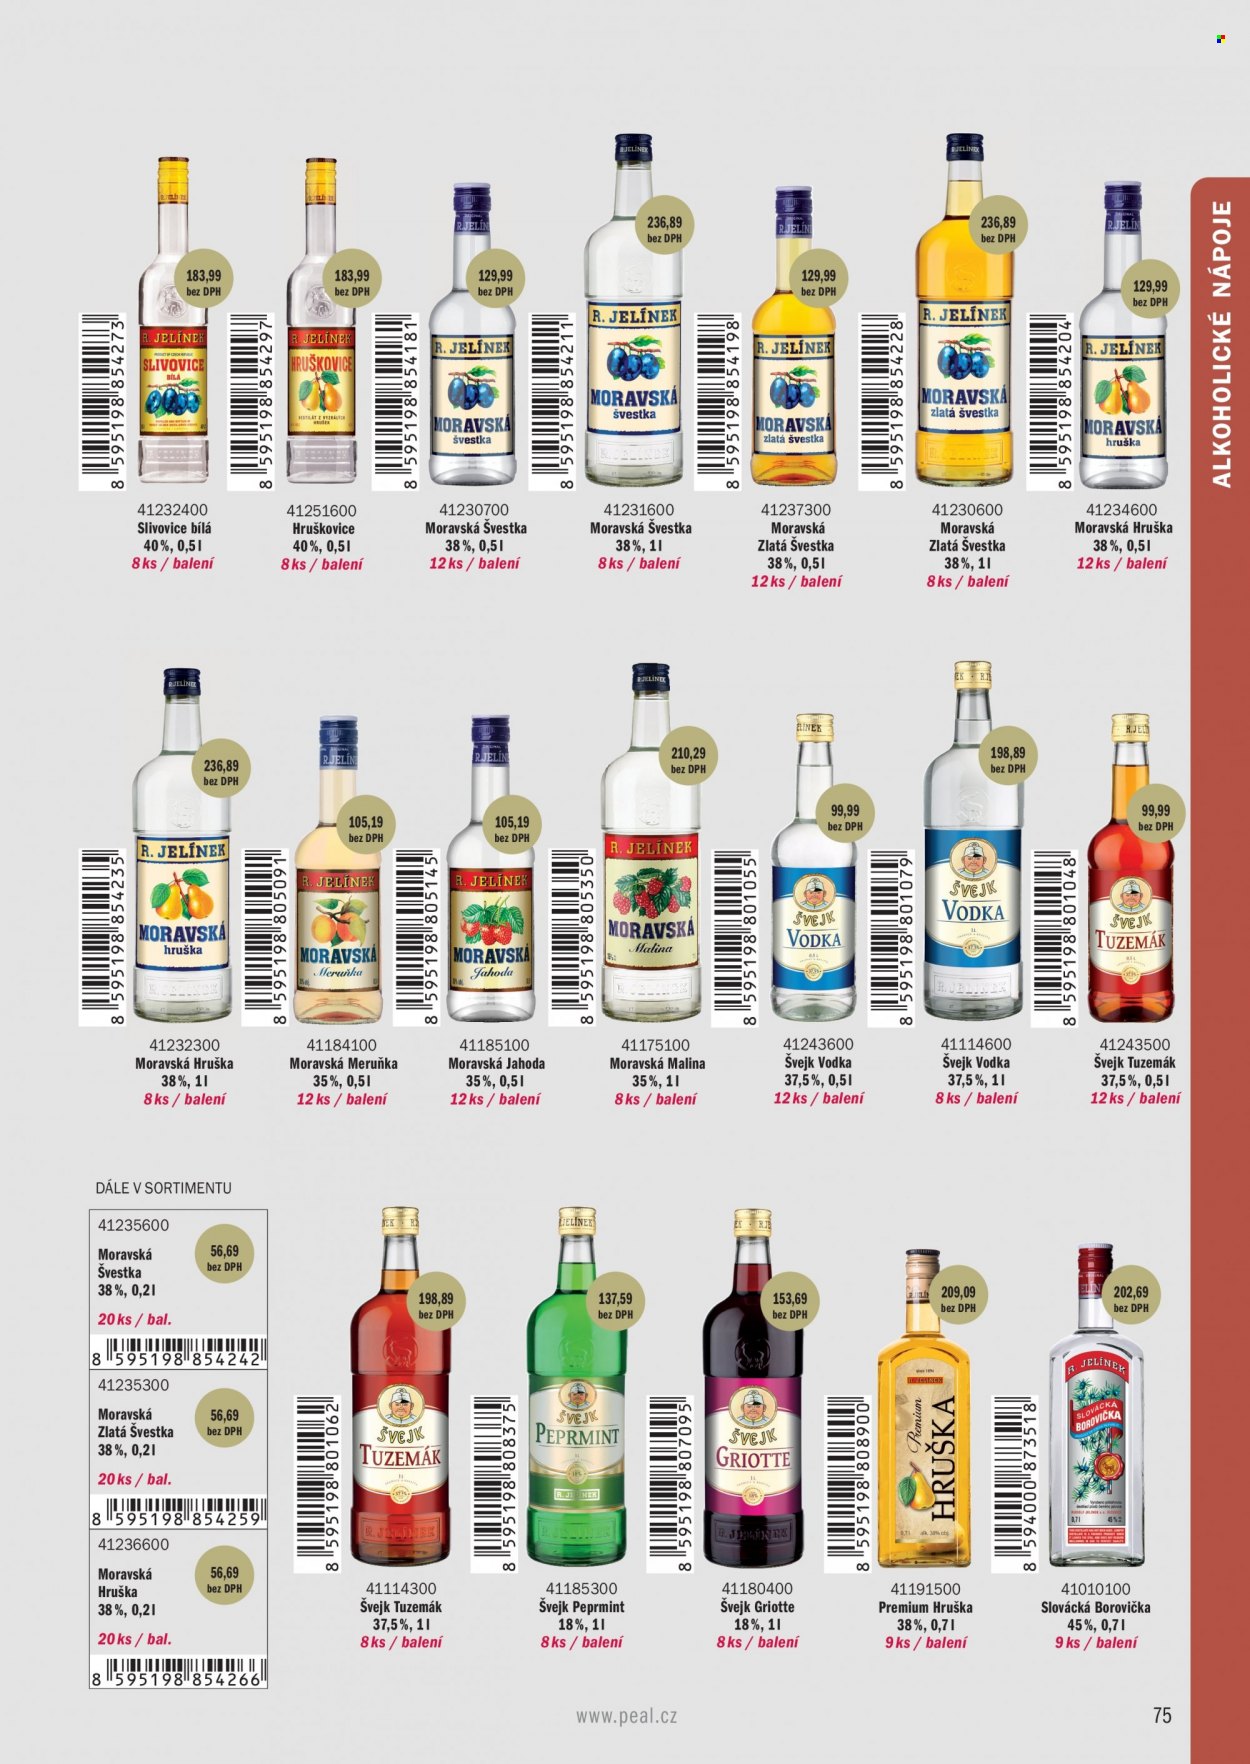 Leták PEAL - Produkty v akci - pivo, alkohol, whisky, brandy. Strana 1.